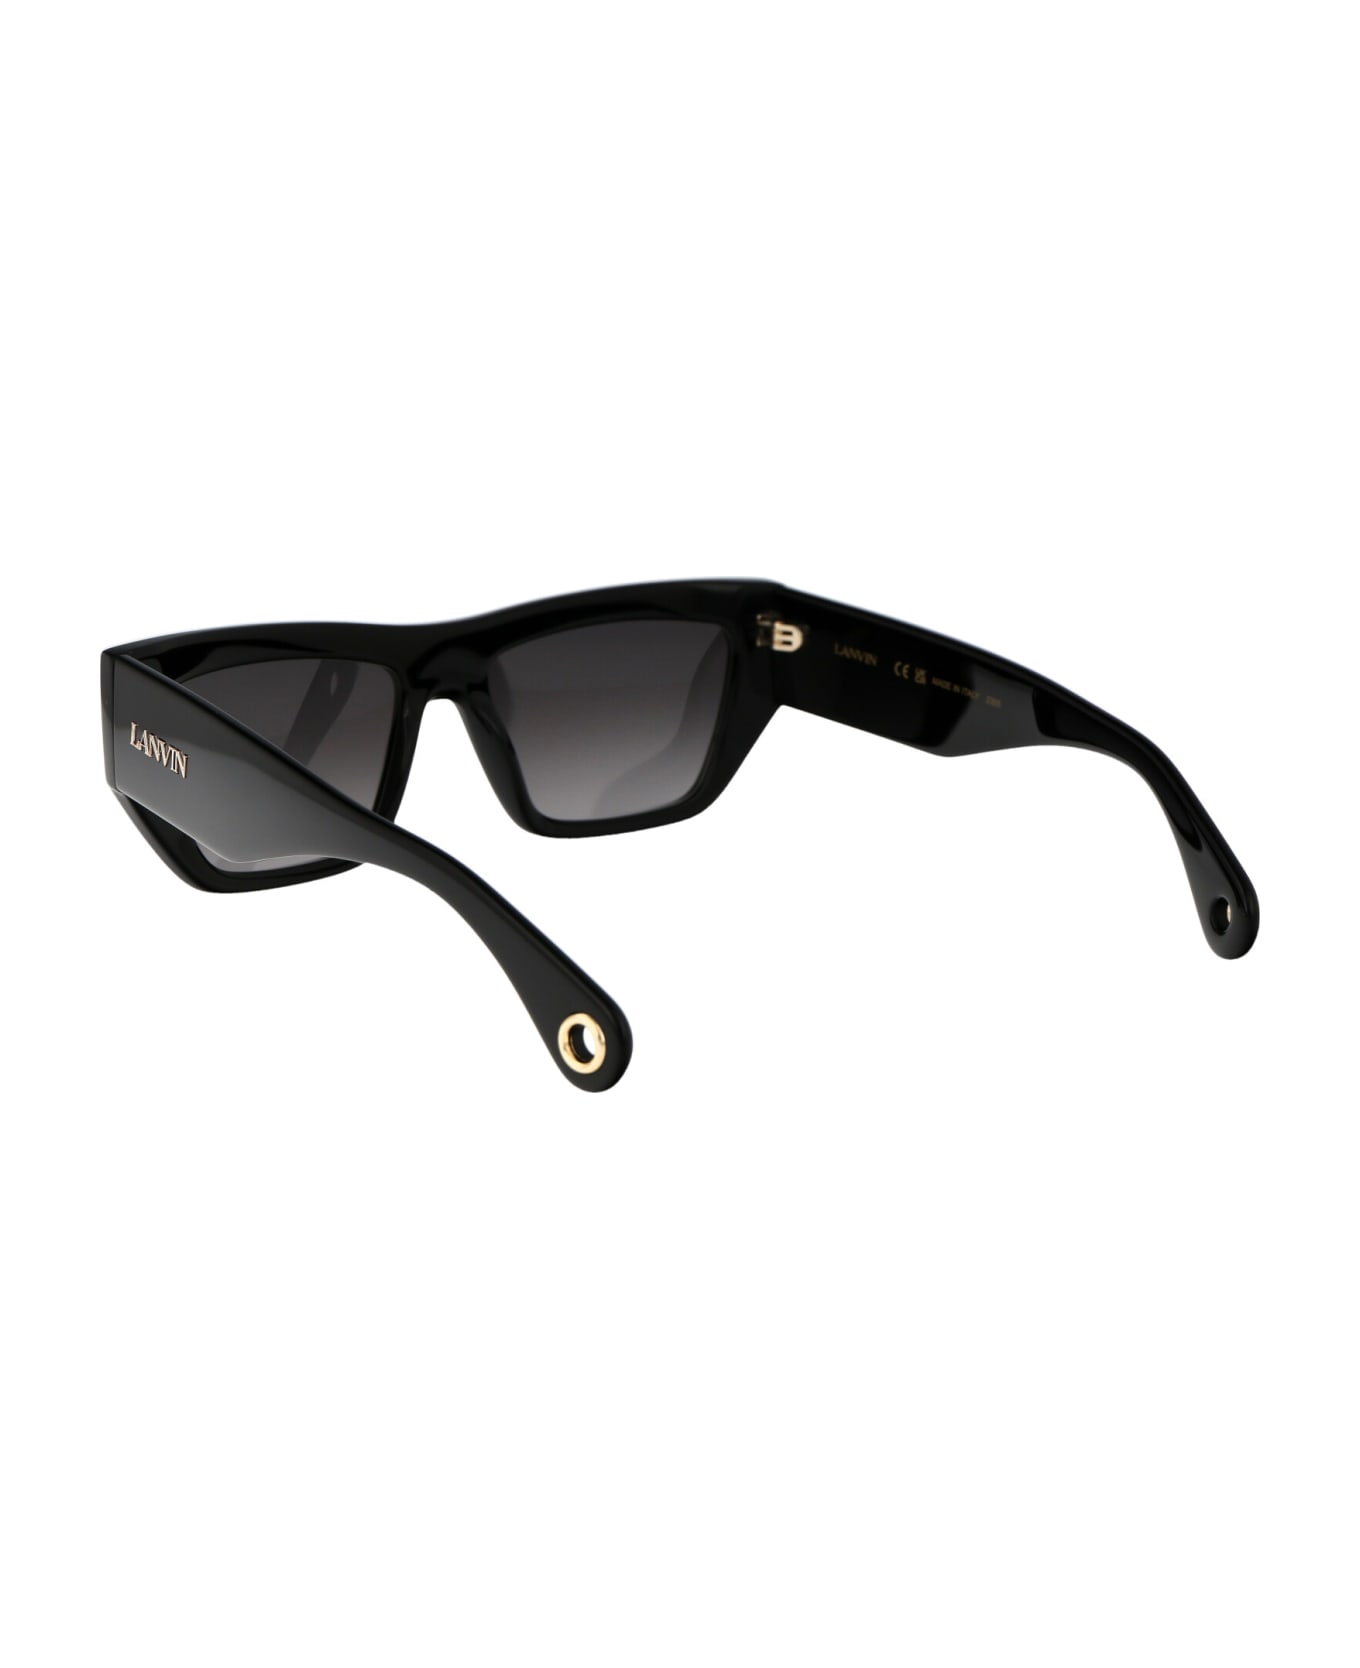 Lanvin Lnv652s Sunglasses - 001 BLACK サングラス